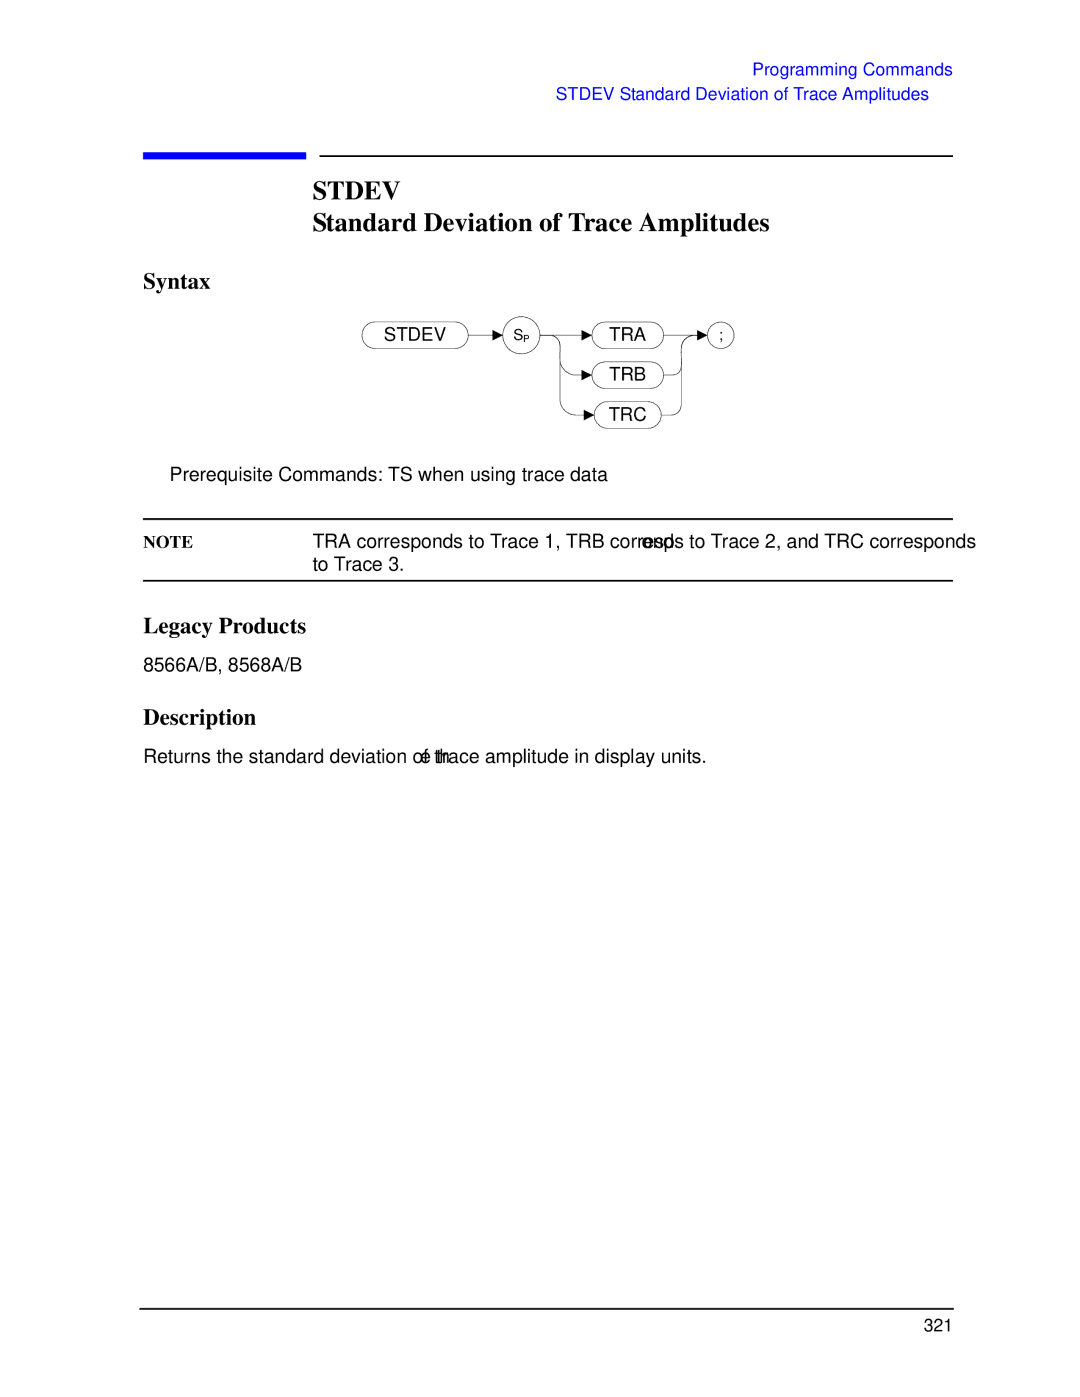 Agilent Technologies N9030a manual Stdev, Standard Deviation of Trace Amplitudes 